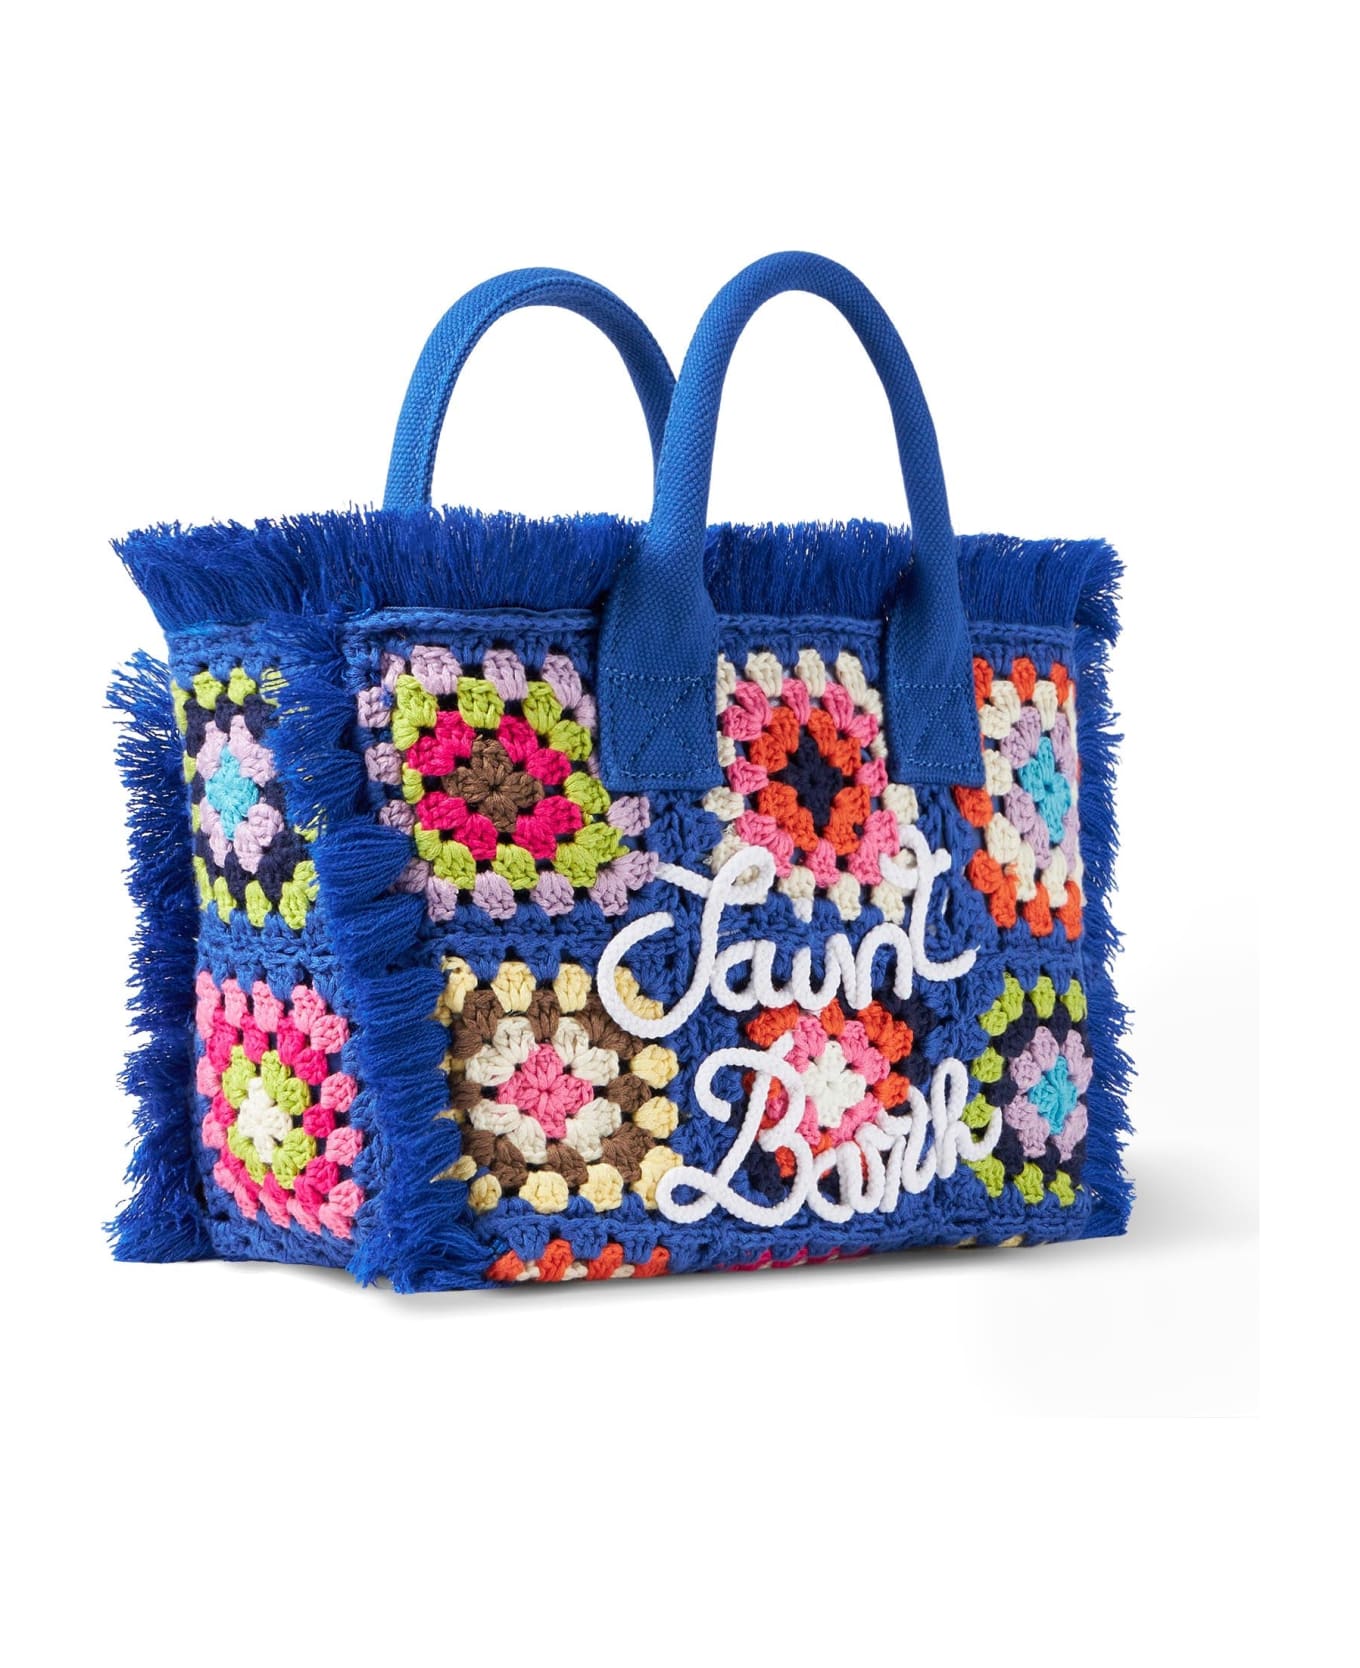 MC2 Saint Barth Colette Blue Crochet Handbag - BLUE